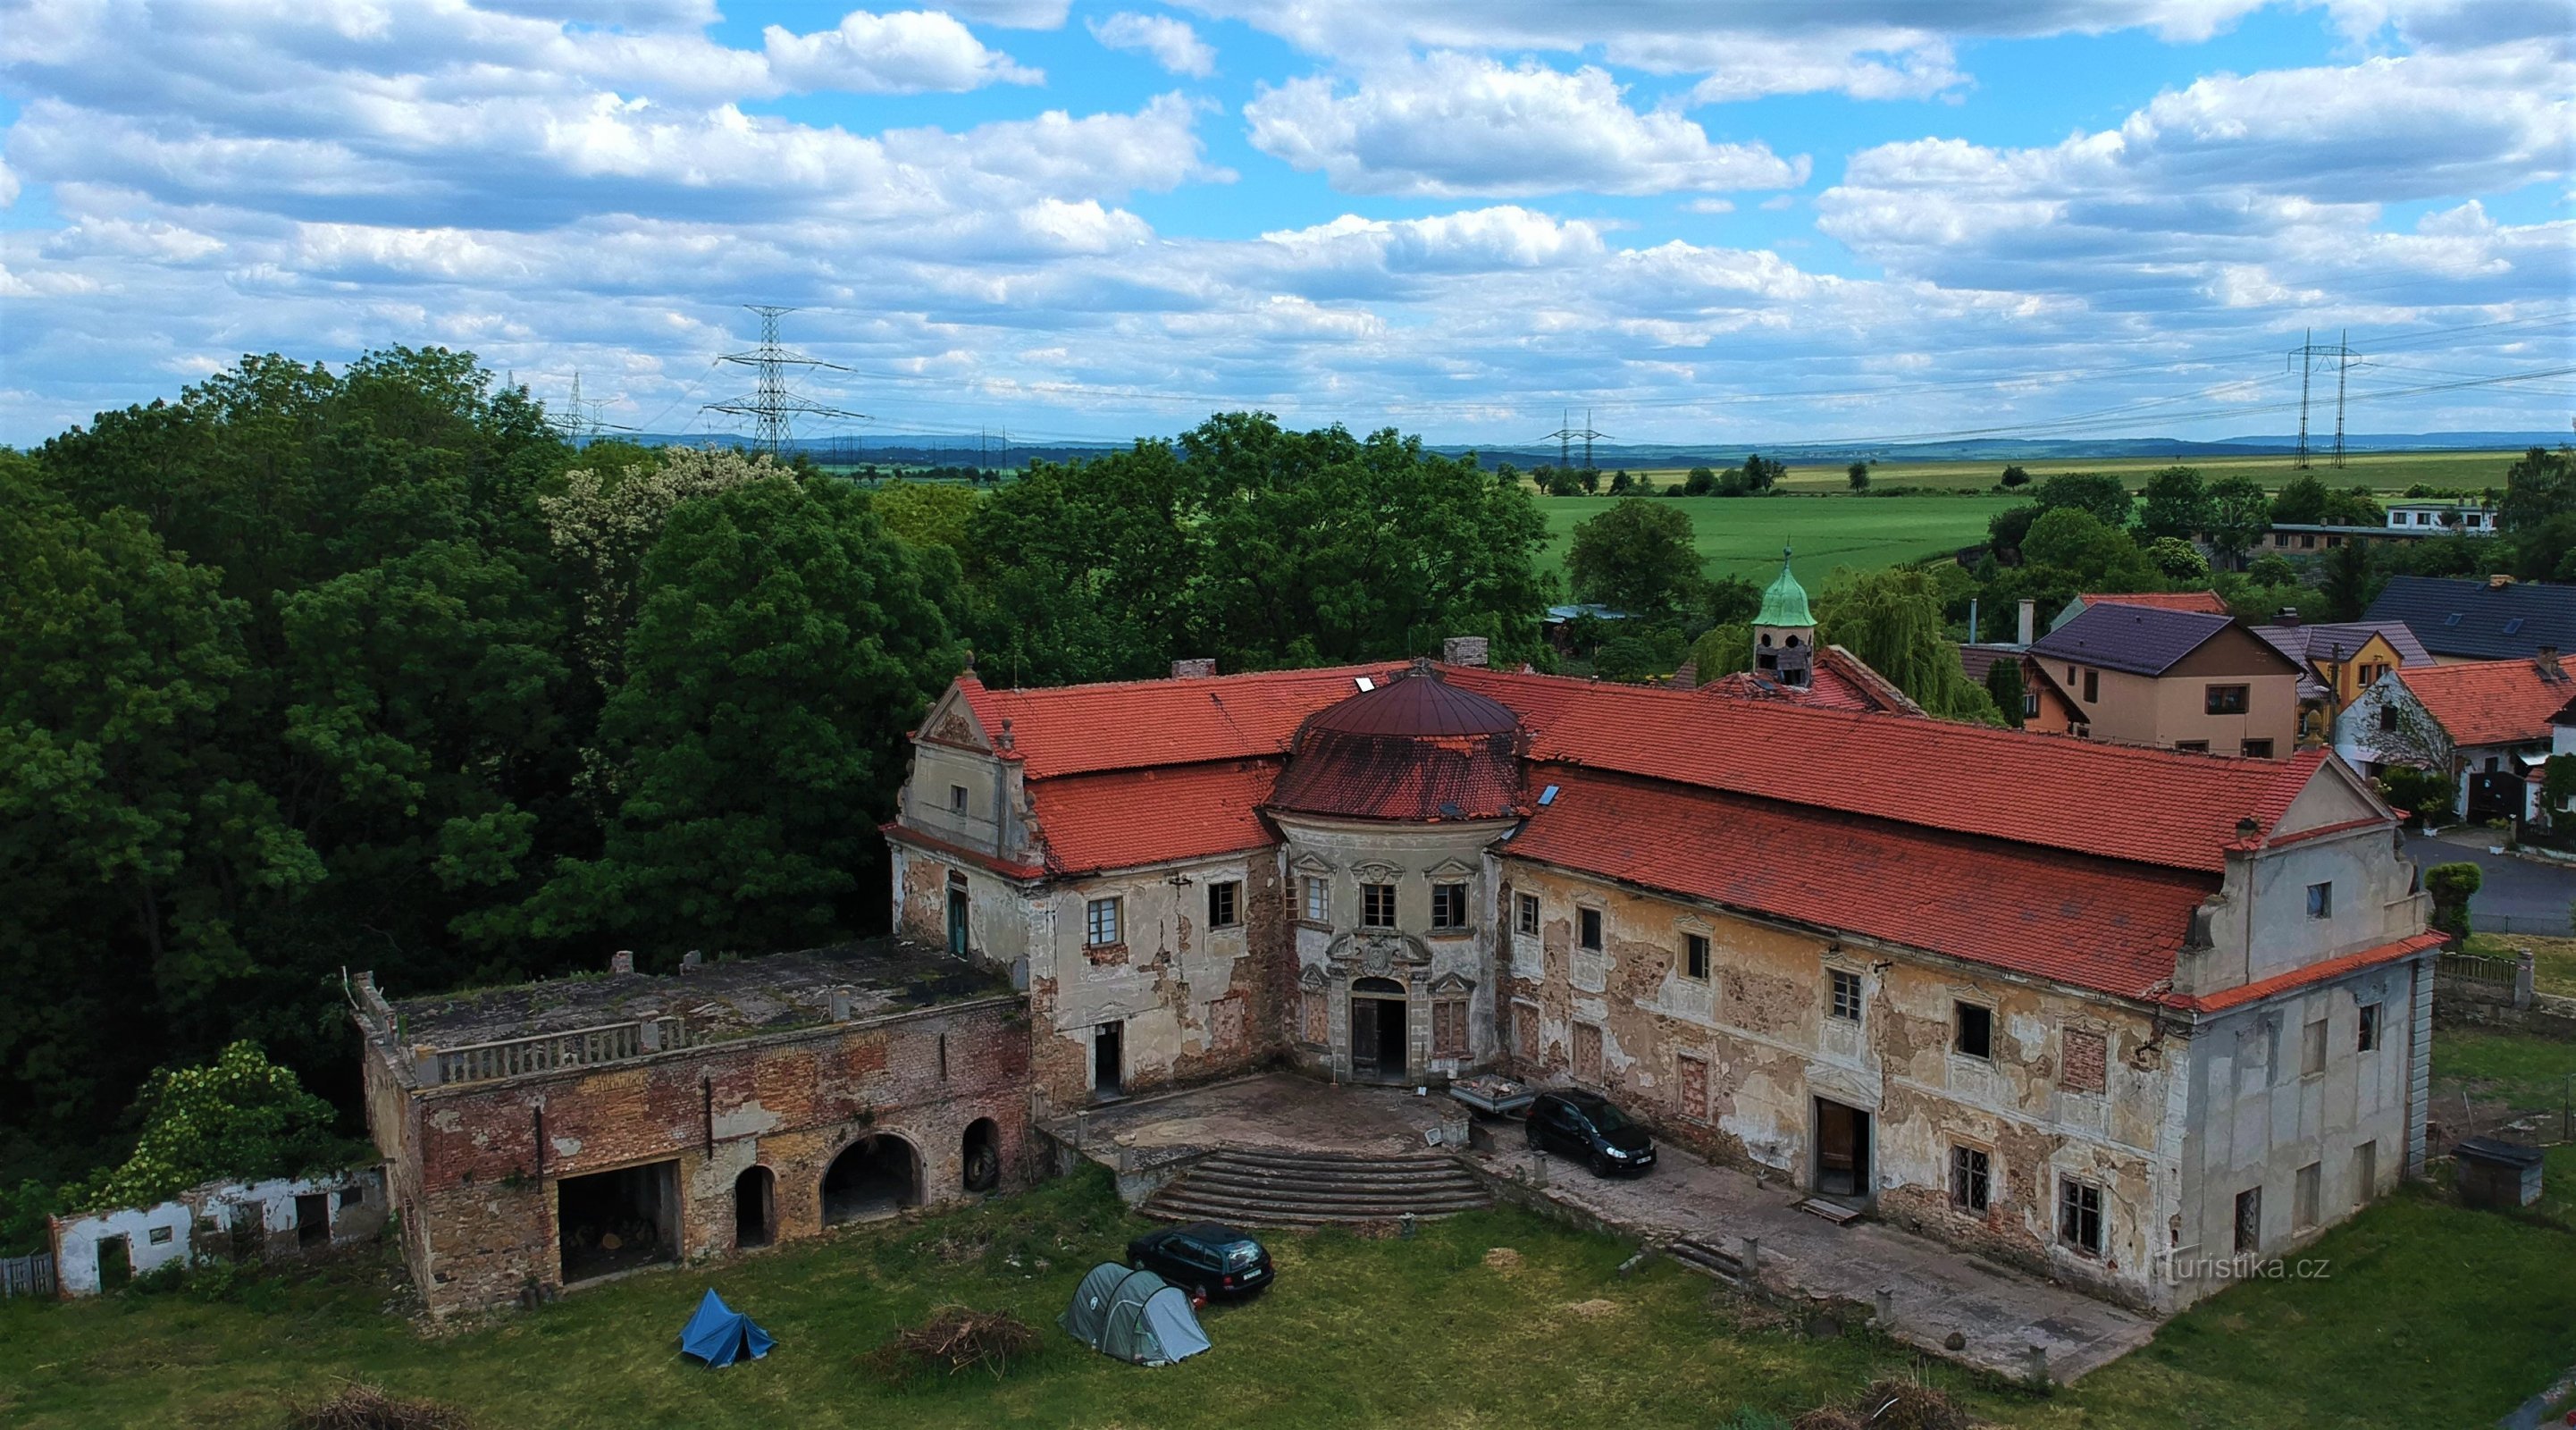 Castelo de Poláky - uma pérola barroca que desperta